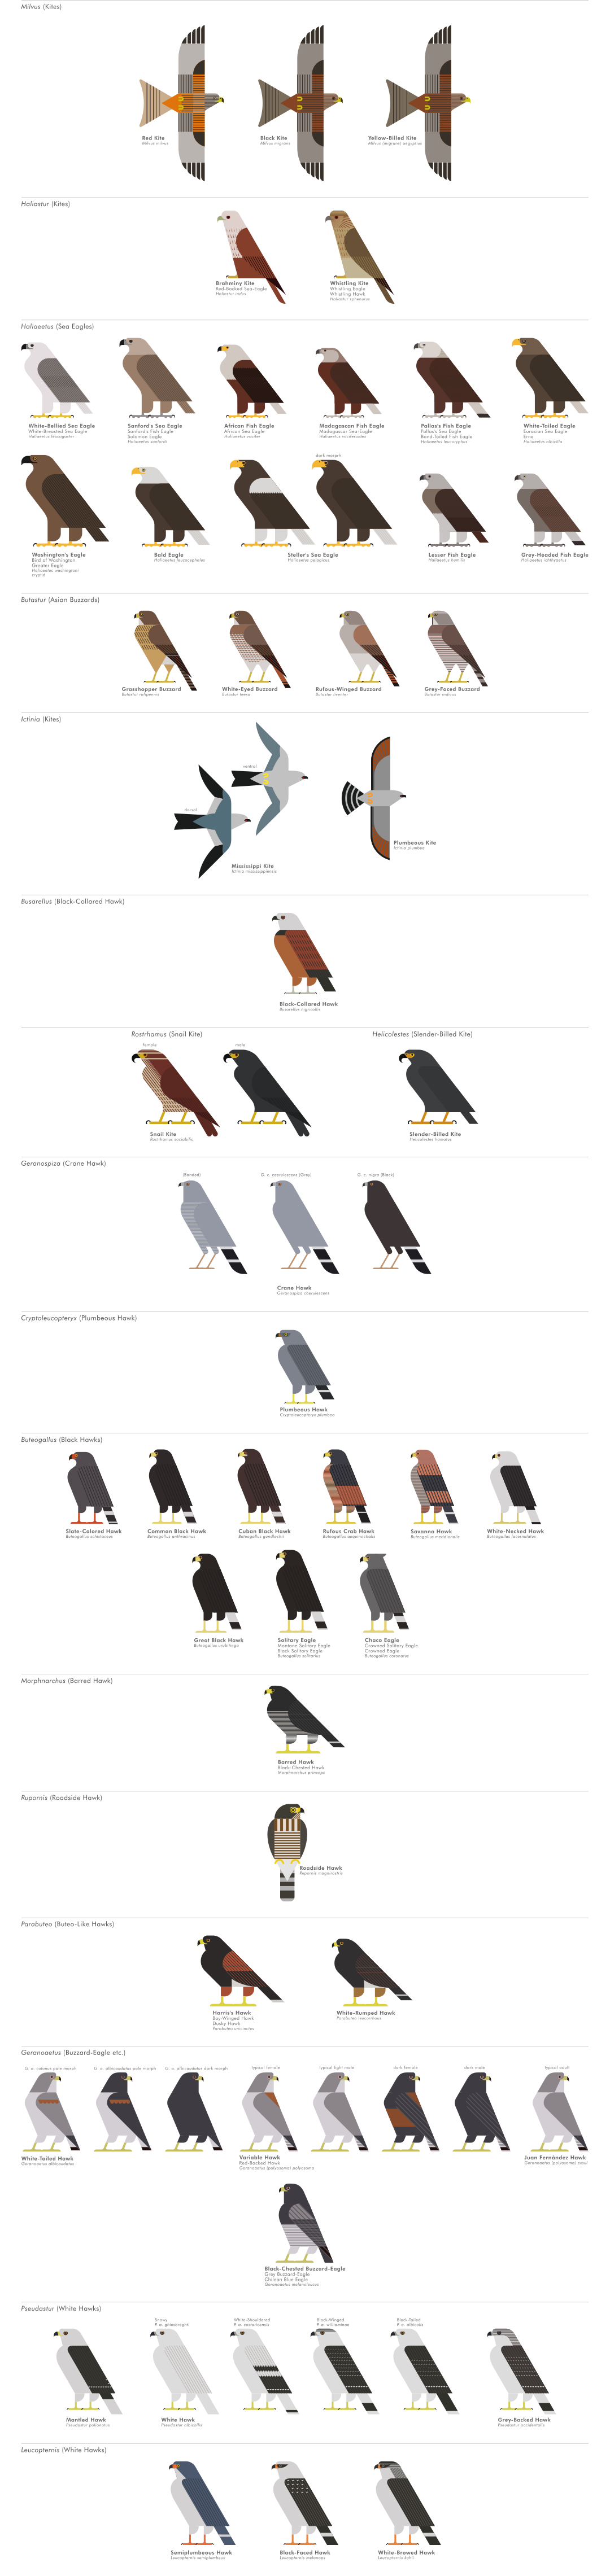 scott partridge - ave - avian vector encyclopedia - accipitriformes - bird vector art